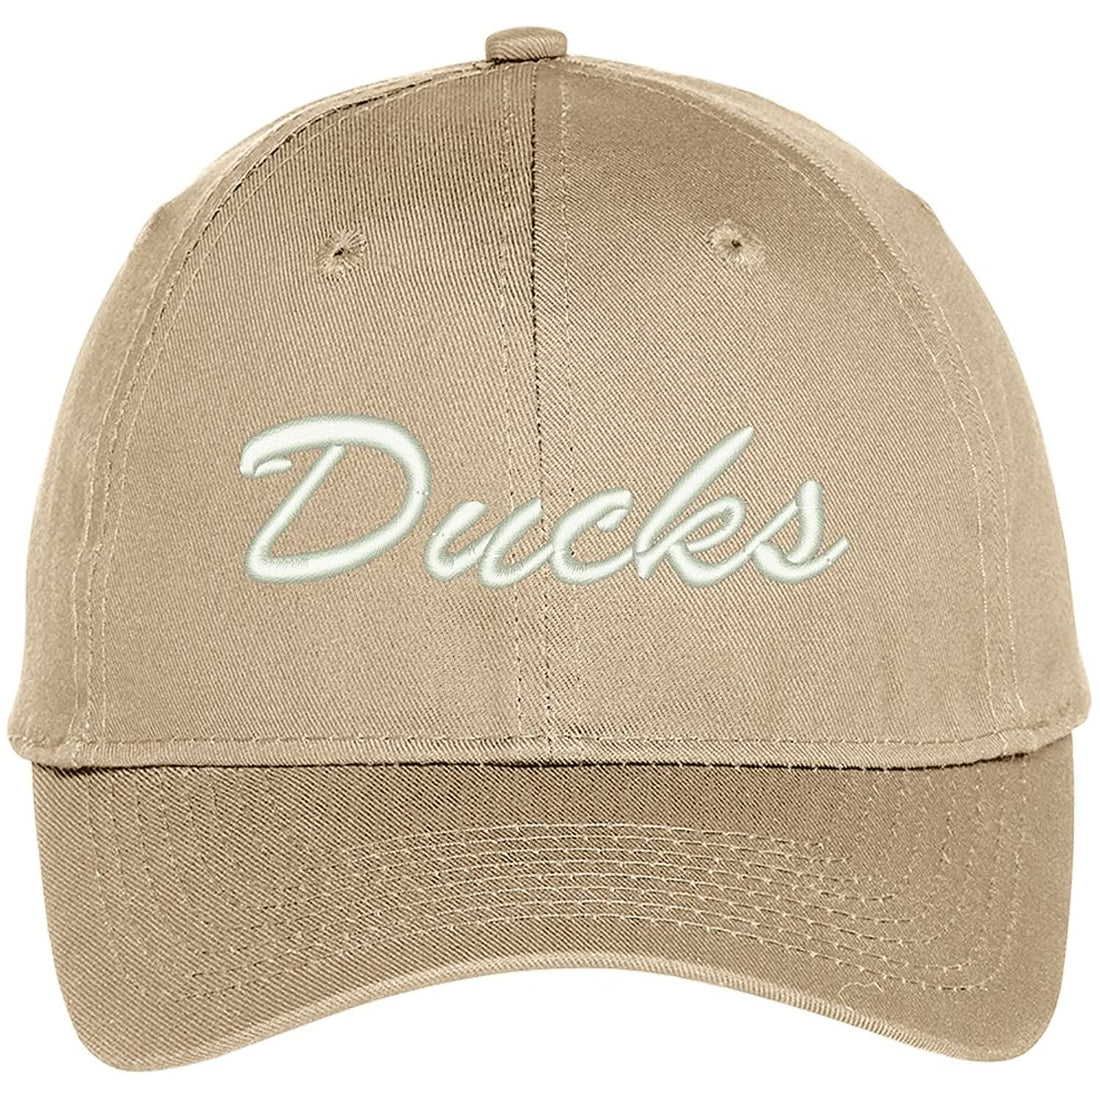 Trendy Apparel Shop Ducks Embroidered Precurved Adjustable Cap